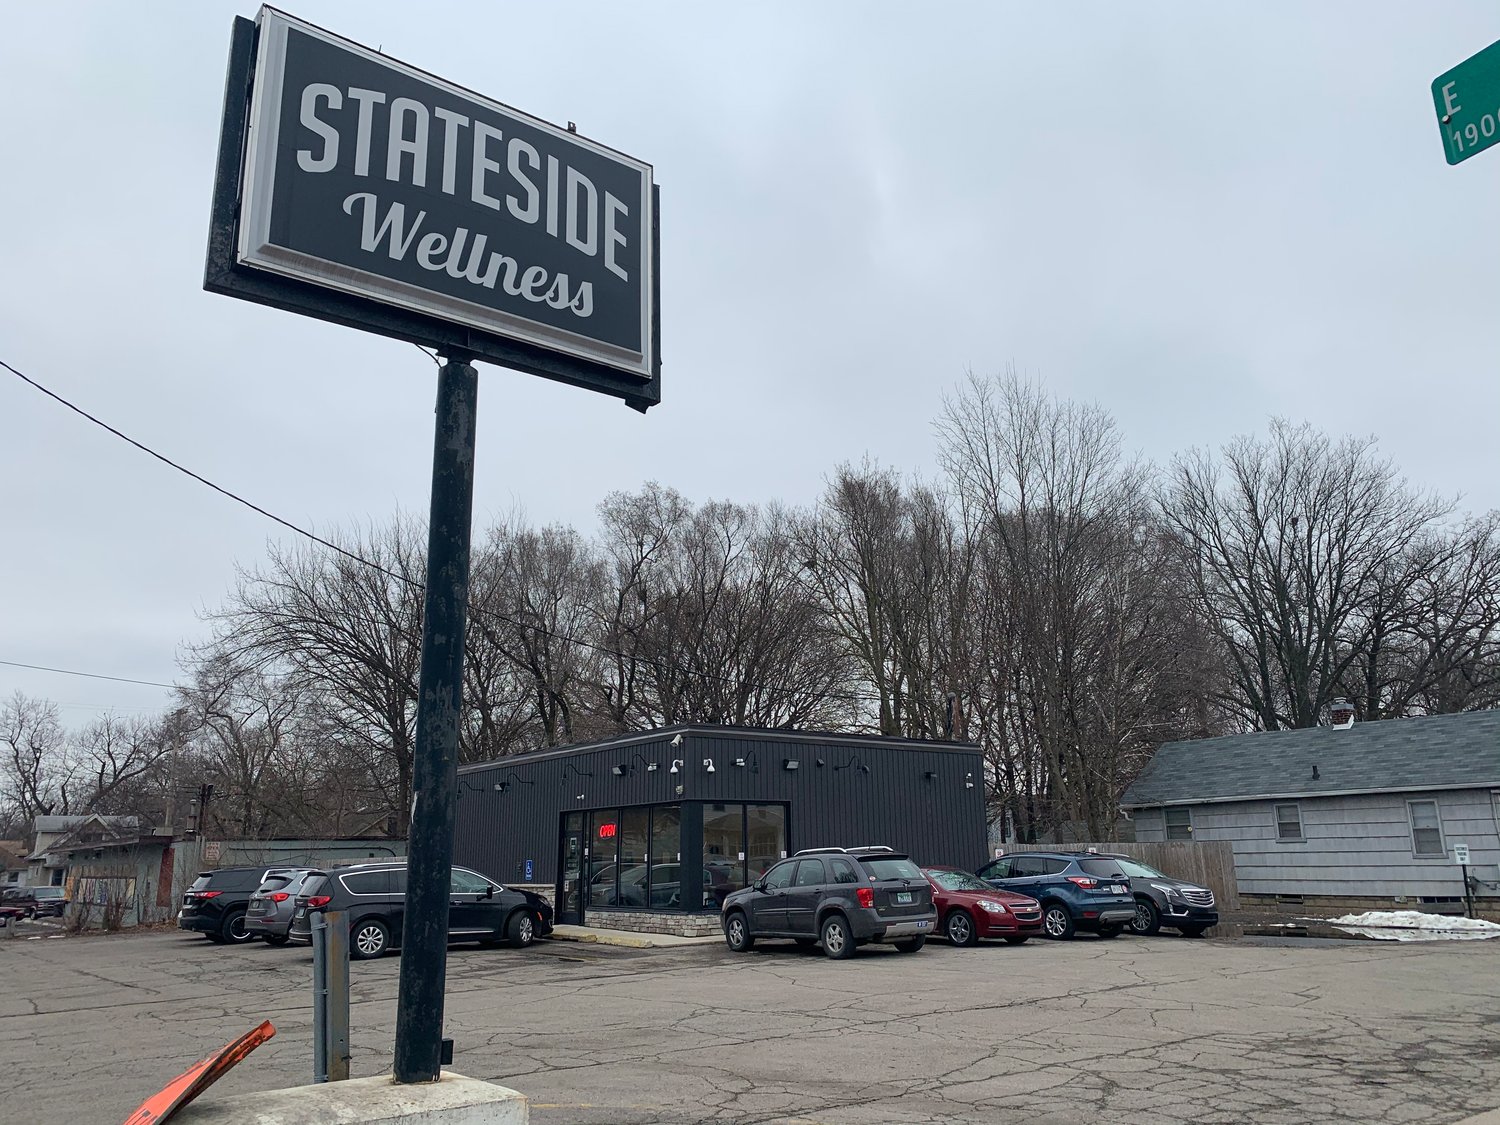 Stateside Wellness, 1900 E. Kalamazoo St., is now open as an adult-use retailer.